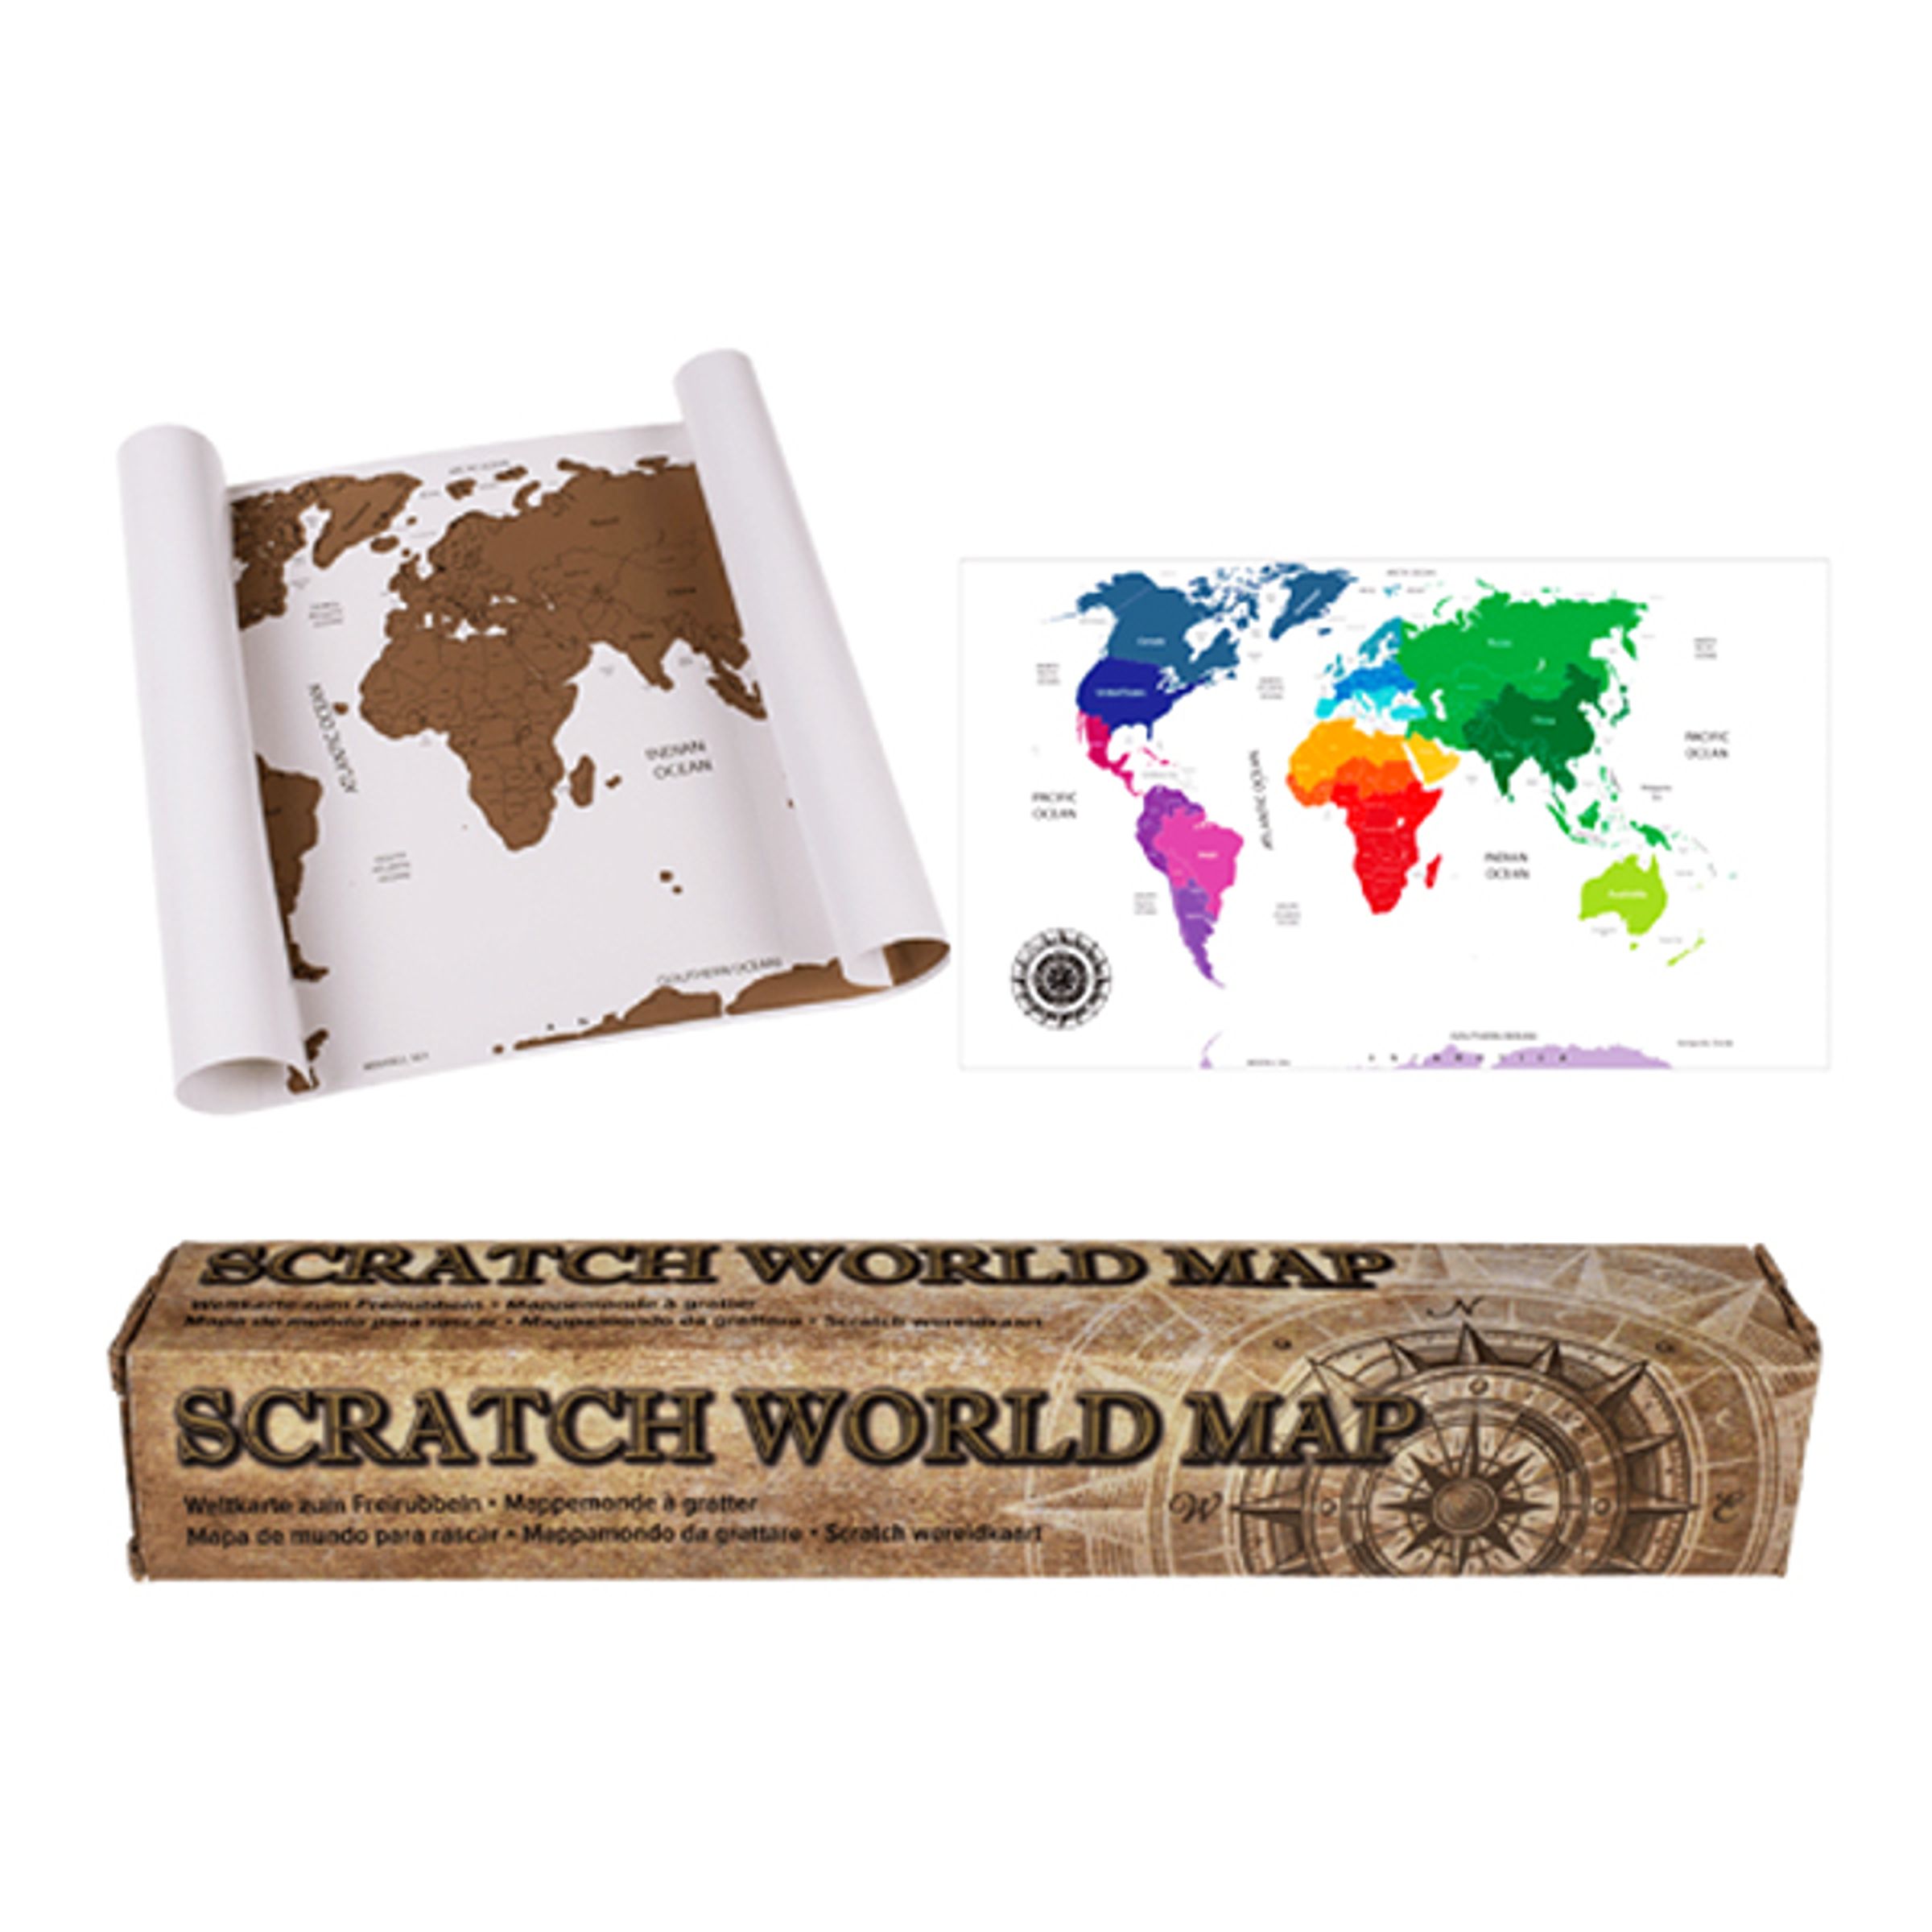 Scratch World Map Original